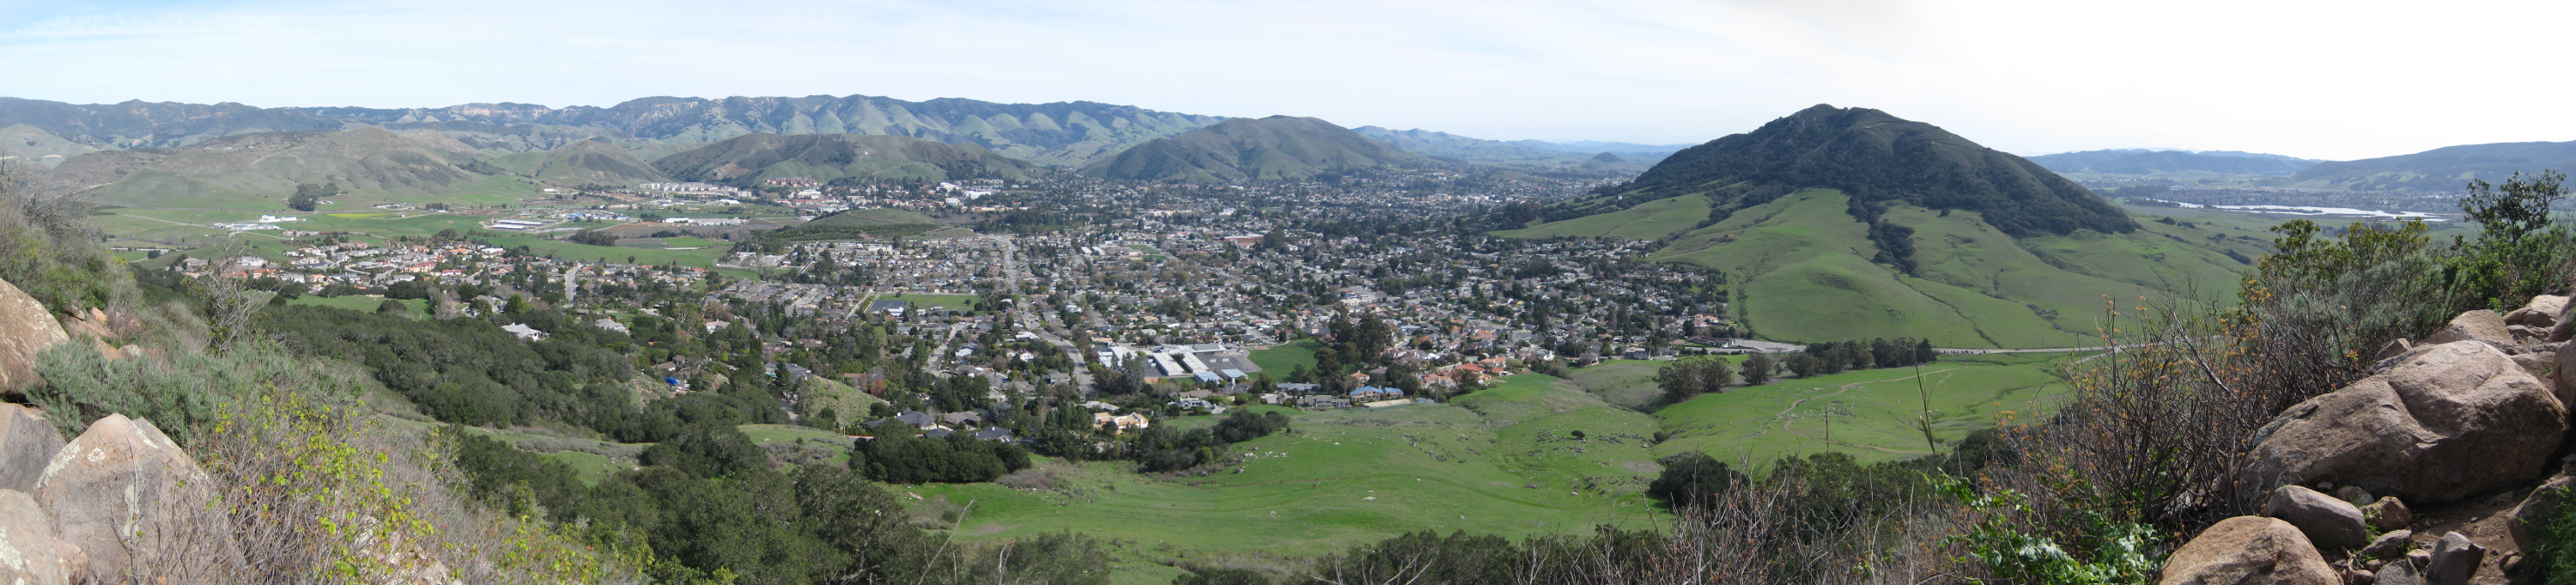 Panorama of San Luis Obispo